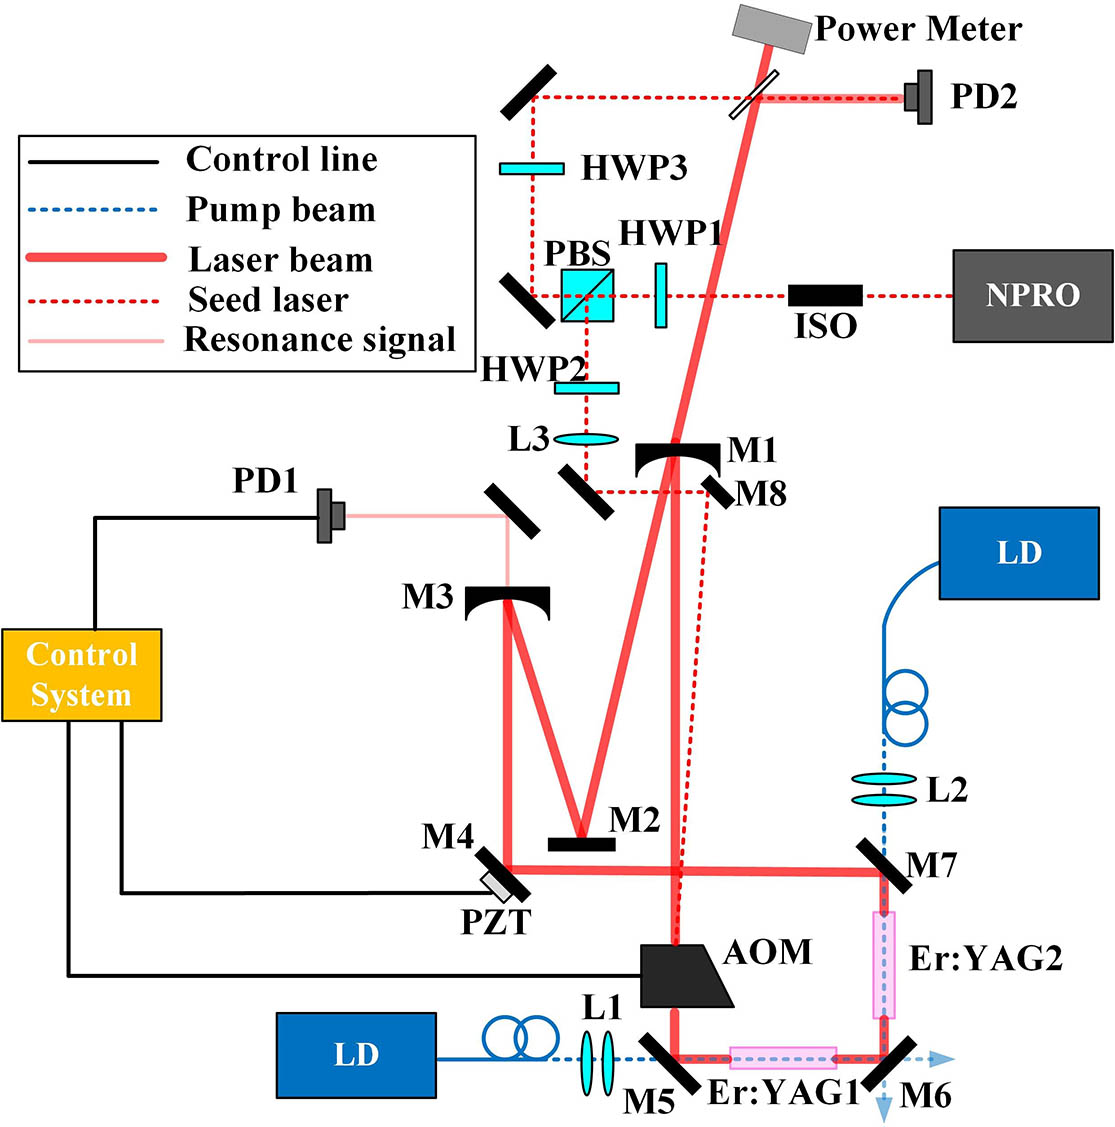 Schematic diagram of laser setup. PD, photo detector; PBS, polarization beam splitter; HWP, half-wave plate; ISO, isolator; LD, laser diode; AOM, acousto-optic modulator; PZT, piezoelectric ceramic transducer.